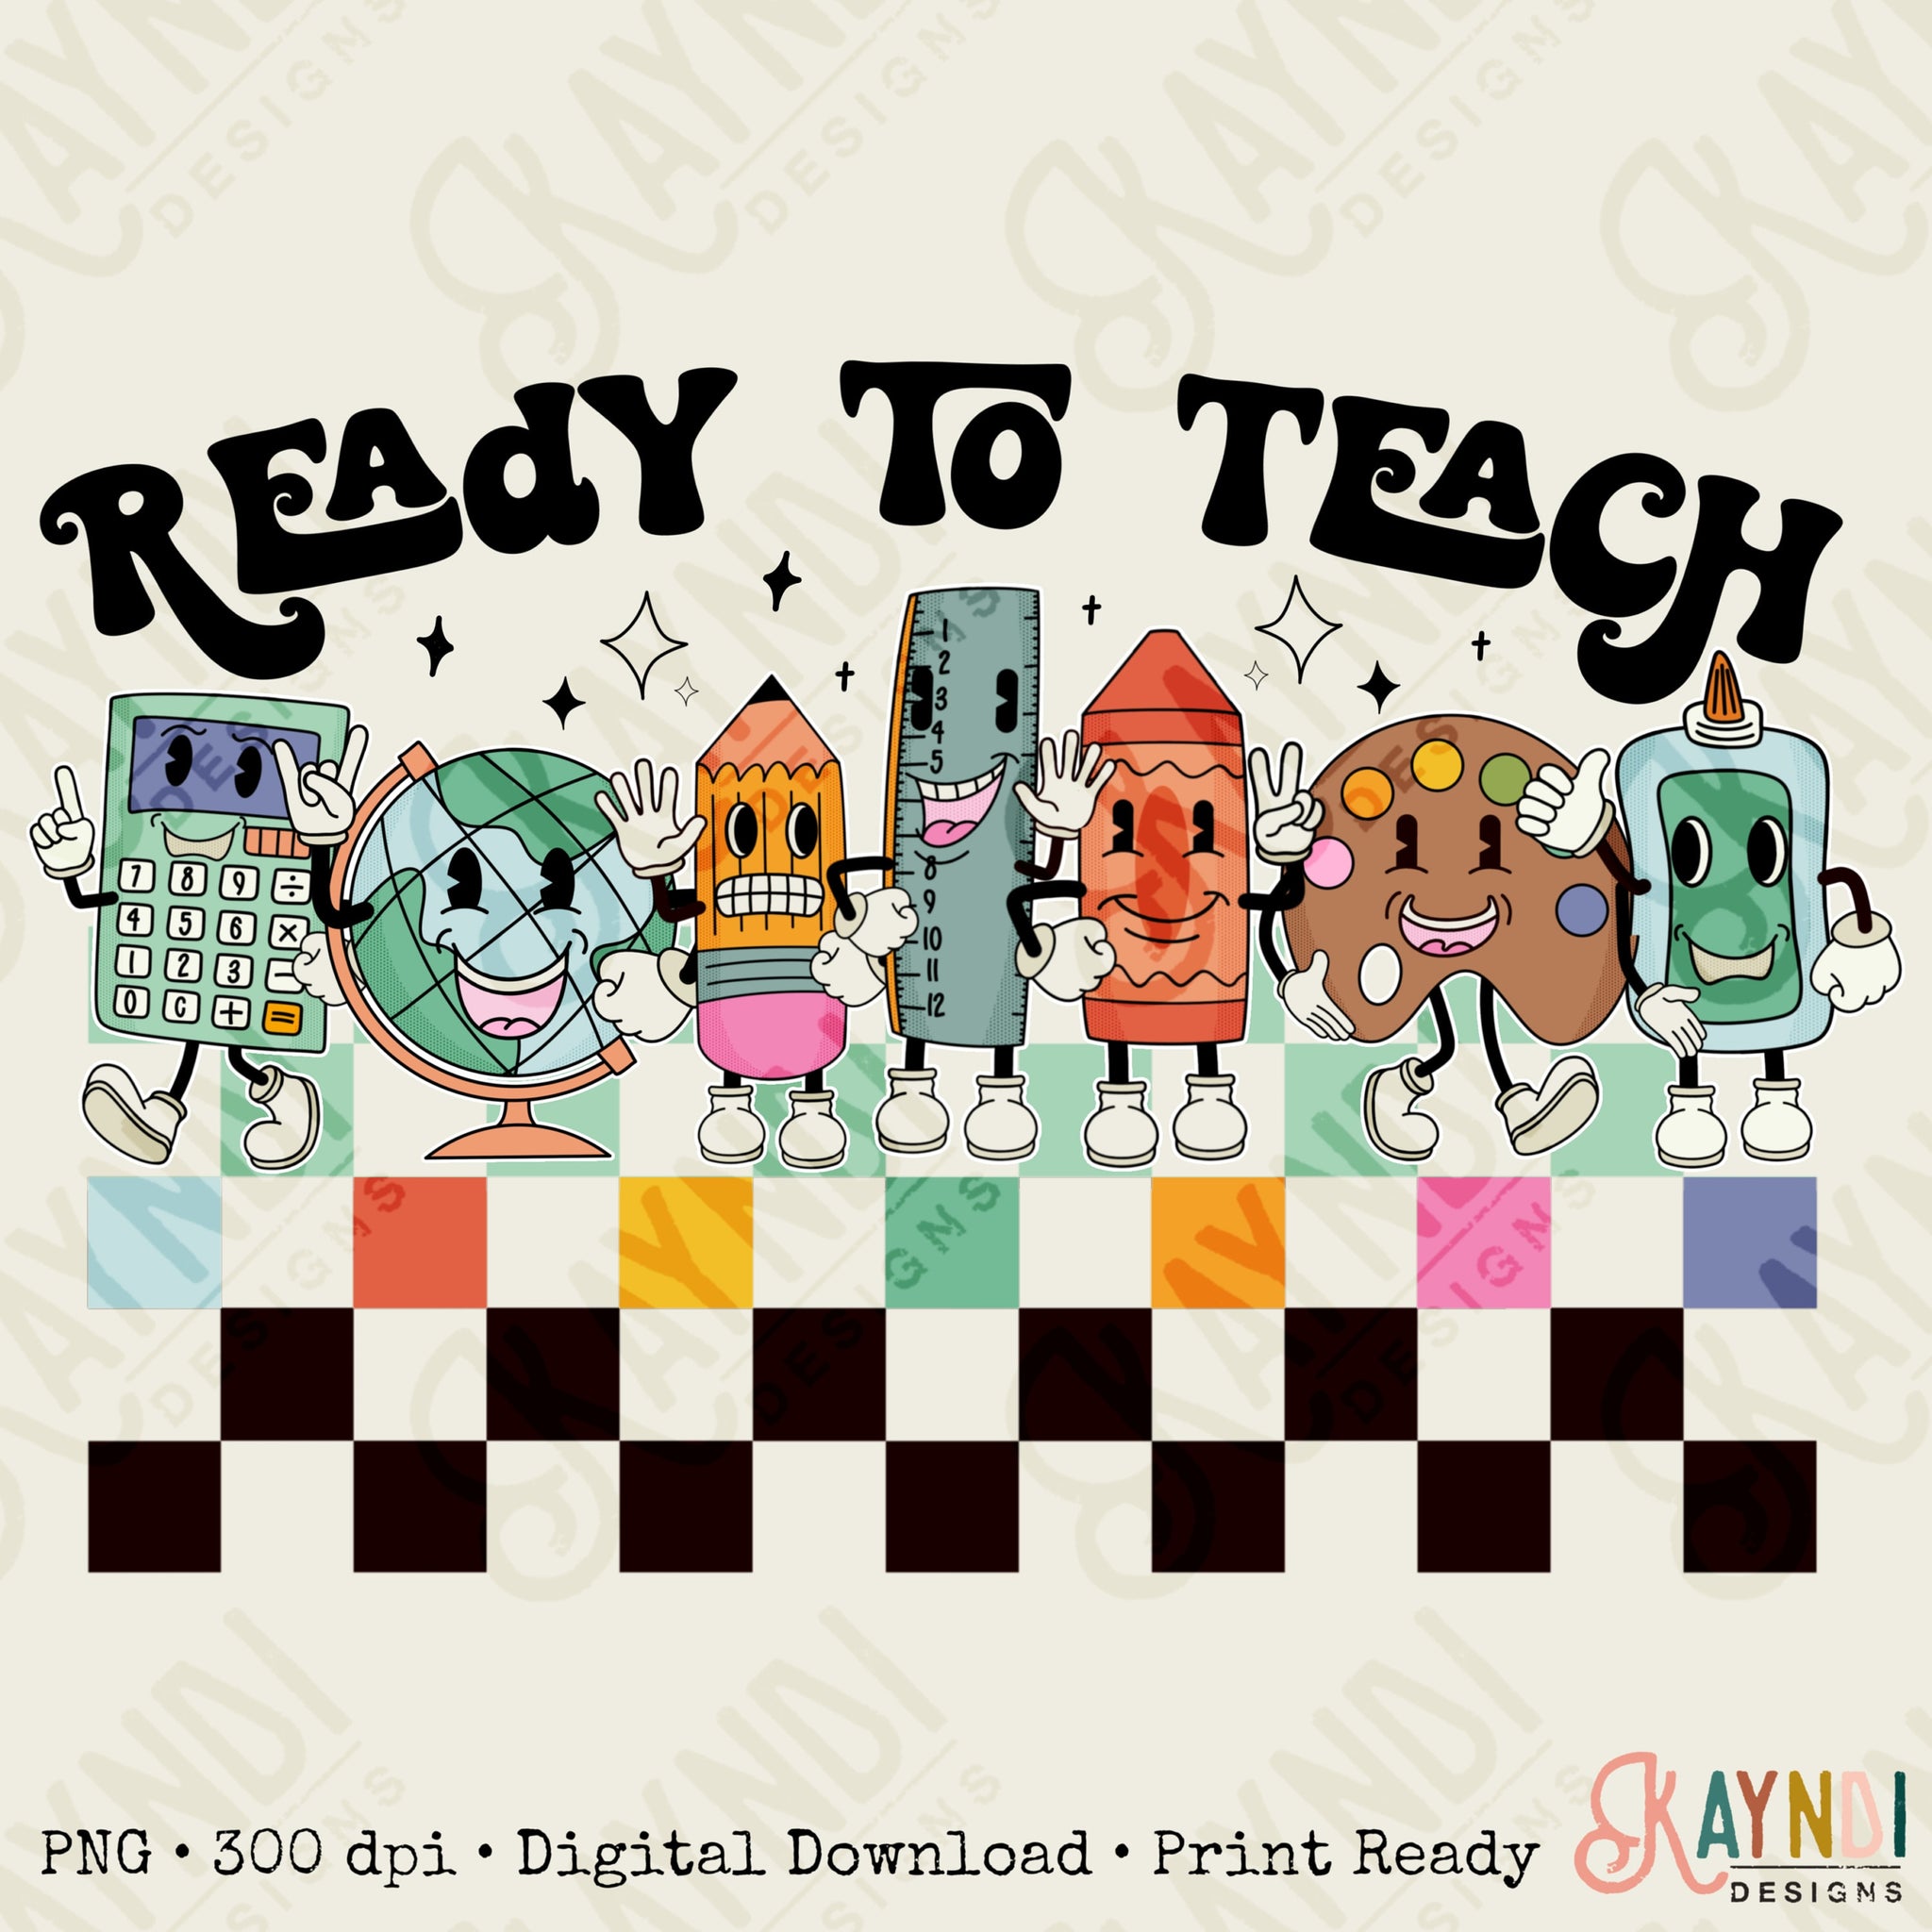 Ready to Teach Sublimation Design PNG Digital Download Printable School Supplies Teacher Elementary School Globe Crayon Pencil Retro Kids